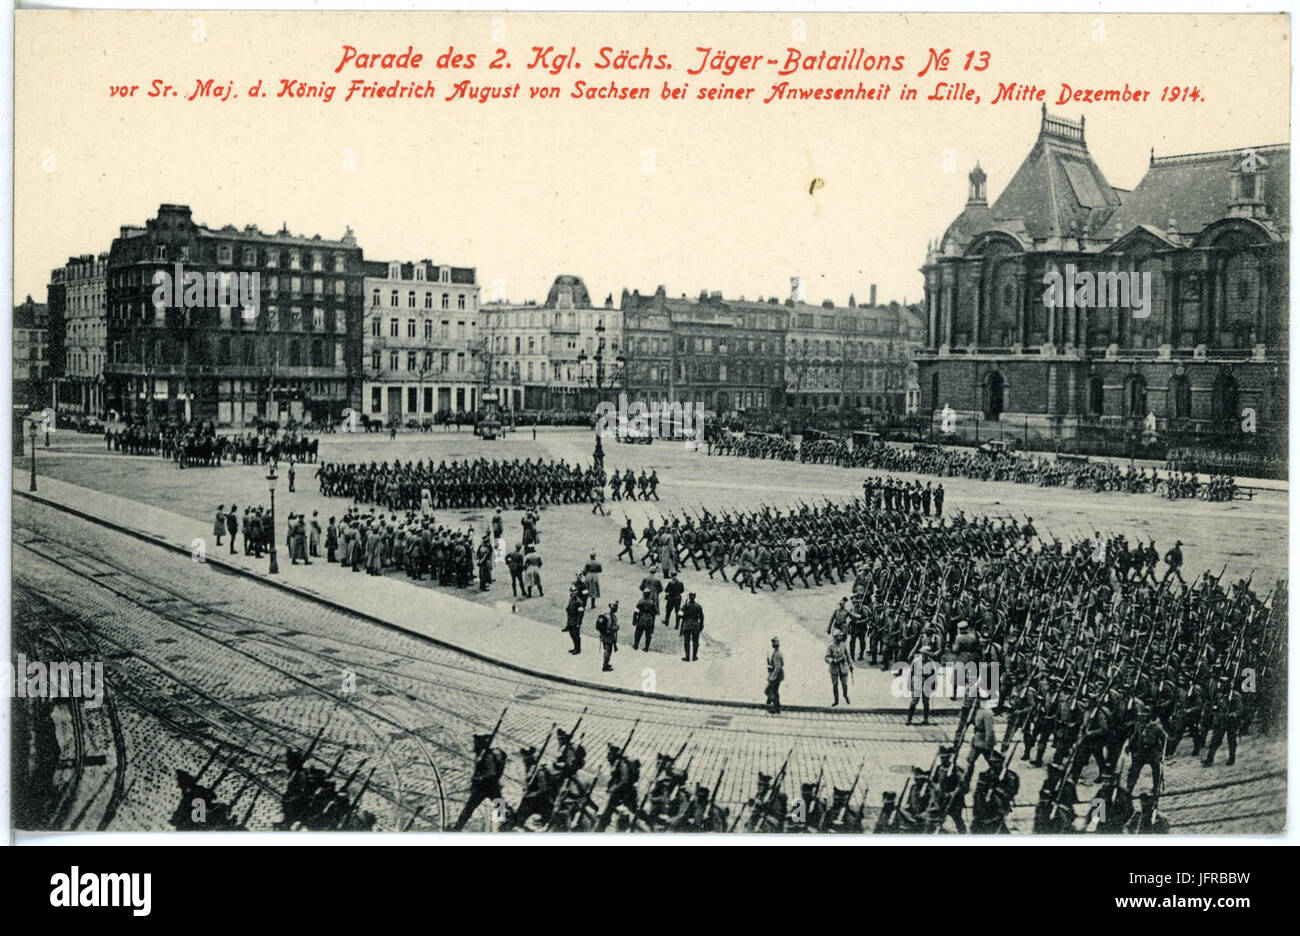 18581-Lille-1914-2. Königlich Sächsisches Jäger-Bataillon Nr. 13 - Parade in Lille Dezember 1914-Brück & Sohn Kunstverlag Stock Photo